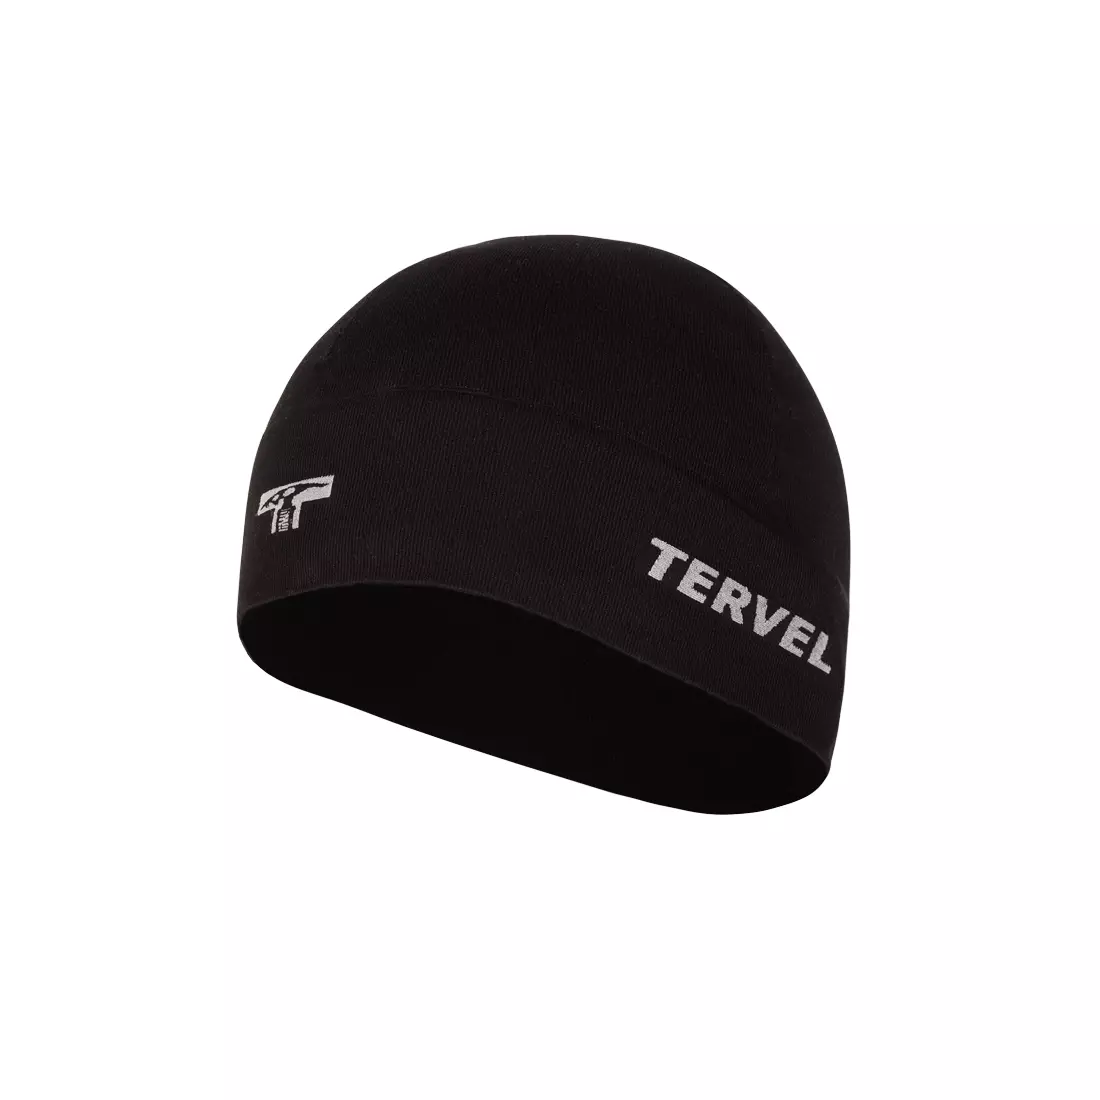 TERVEL 7001 - COMFORTLINE - training cap, color: Black, size: Universal